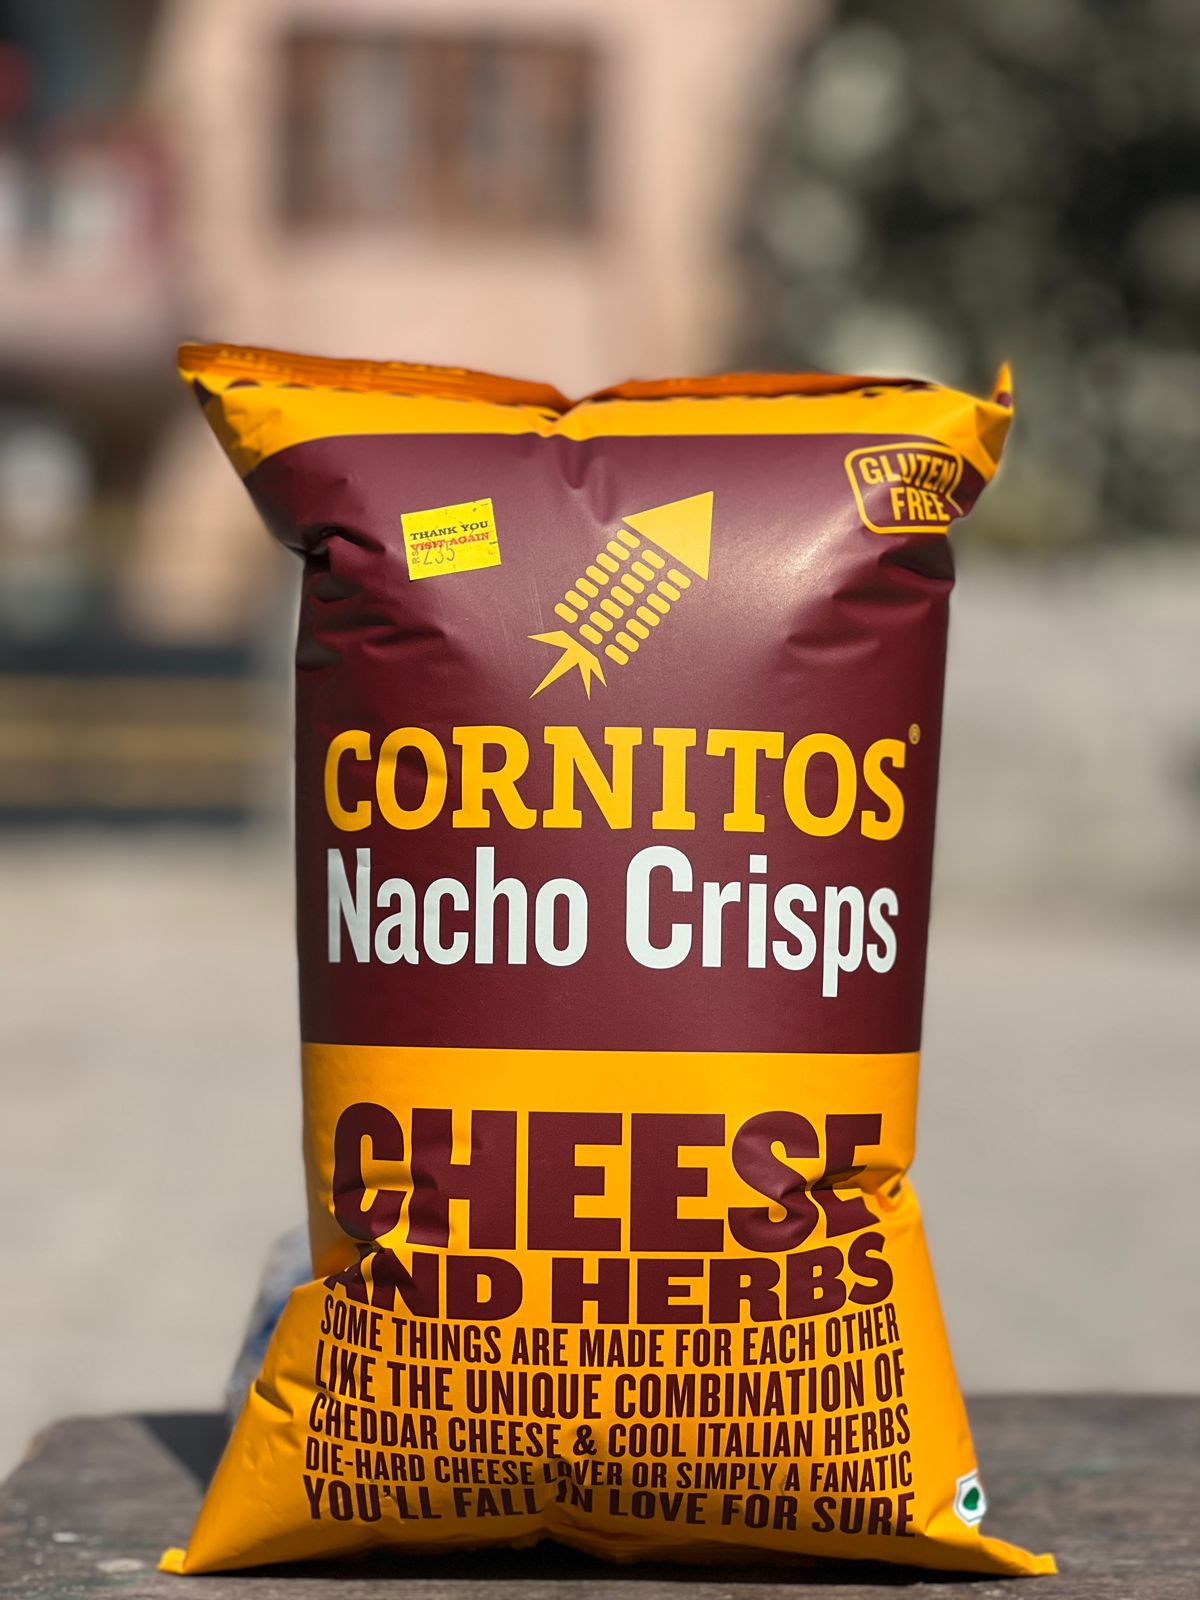 cornitos-nacho-crisp-cheese-herbs-140g